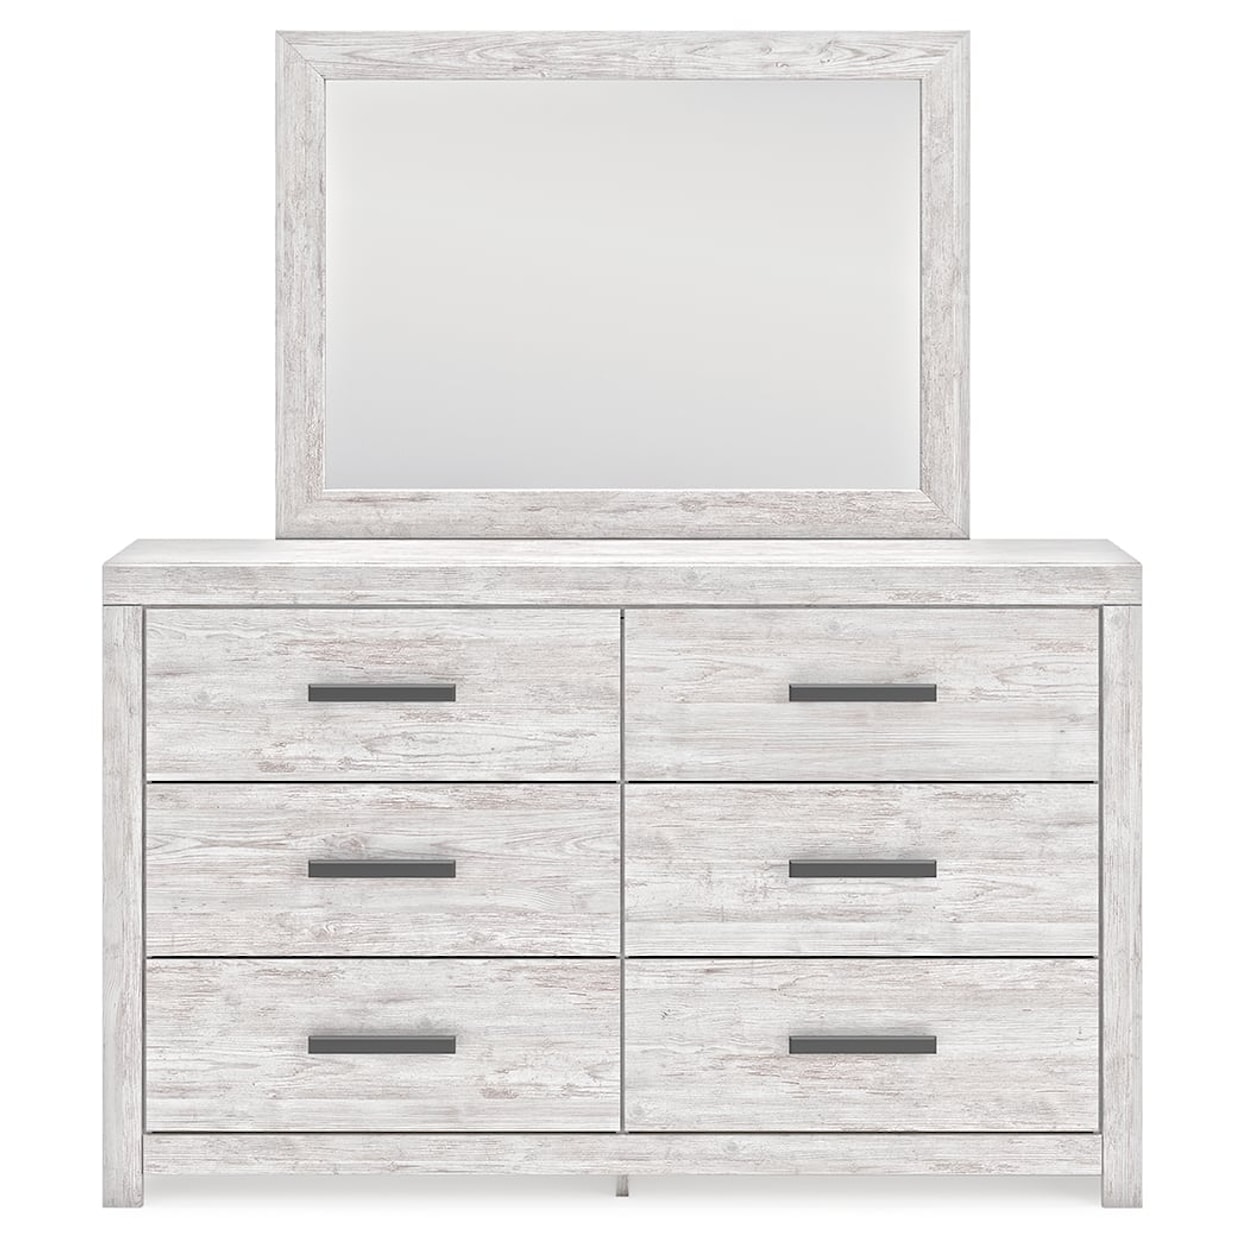 StyleLine Cayboni Dresser and Mirror